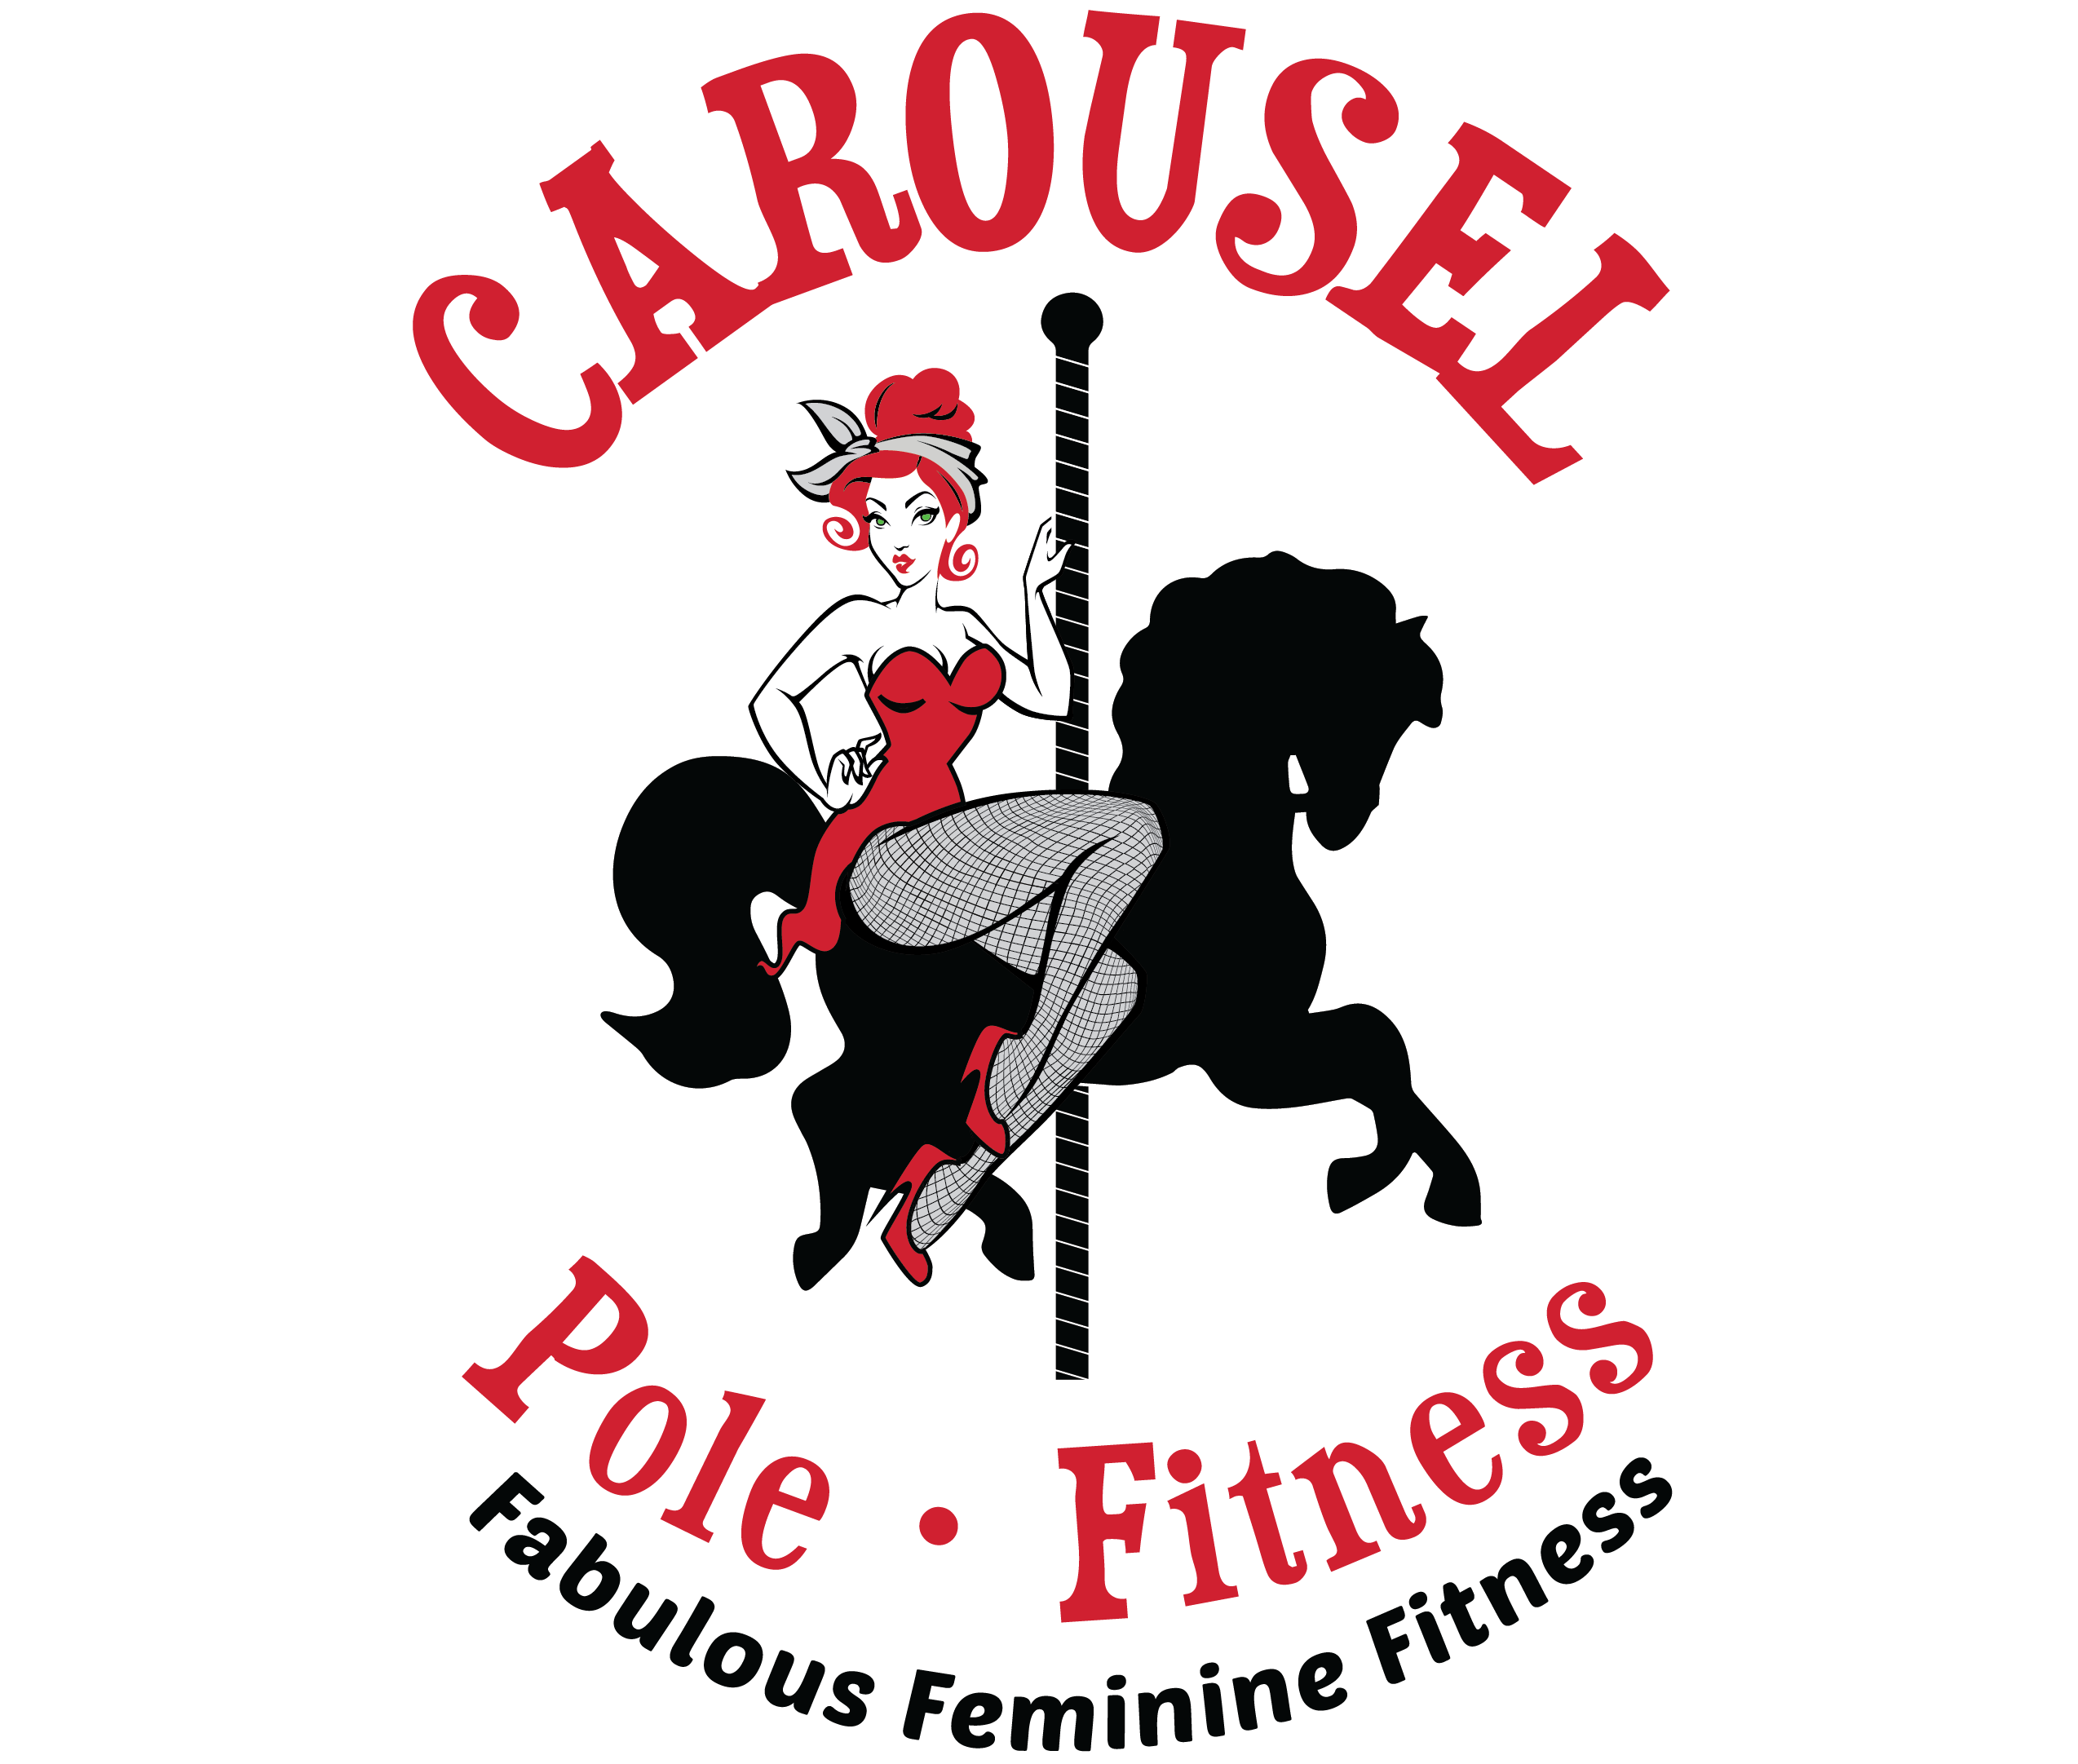 Carousel Pole Fitness